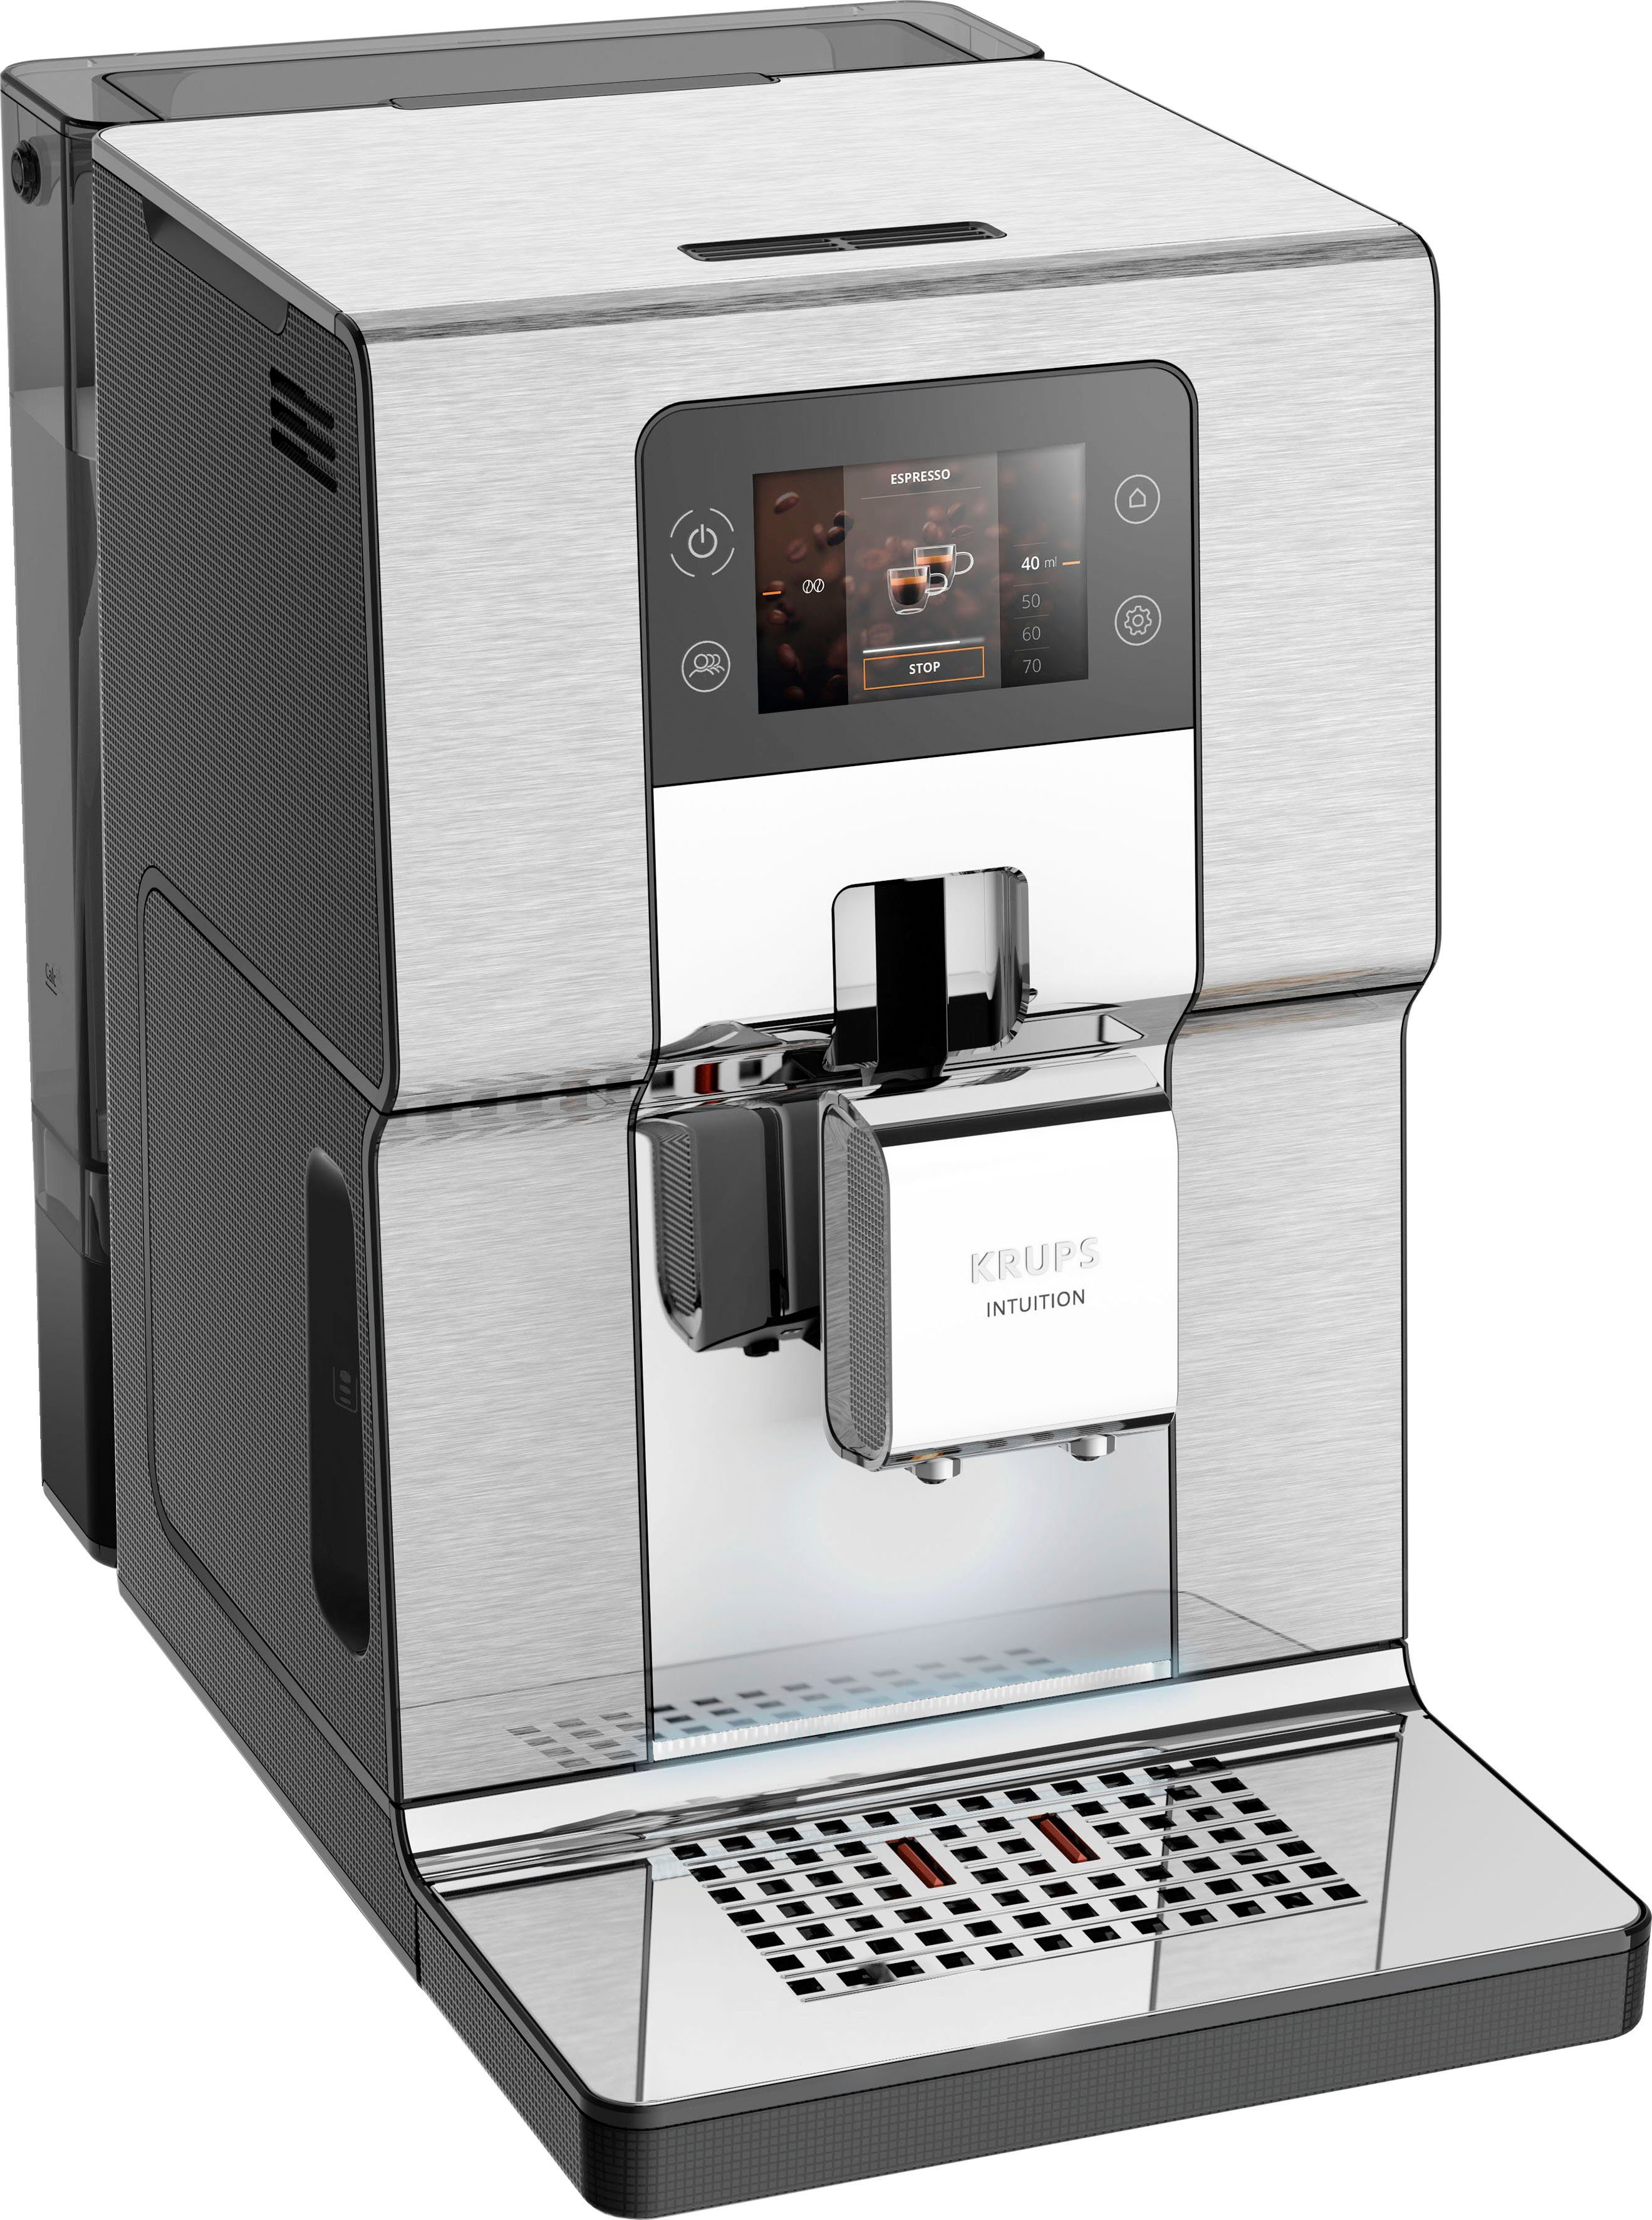 21 Kaltgetränke-Spezialitäten, Heiß- EA877D Farb-Touchscreen Experience+, Intuition und geräuscharm, Kaffeevollautomat Krups